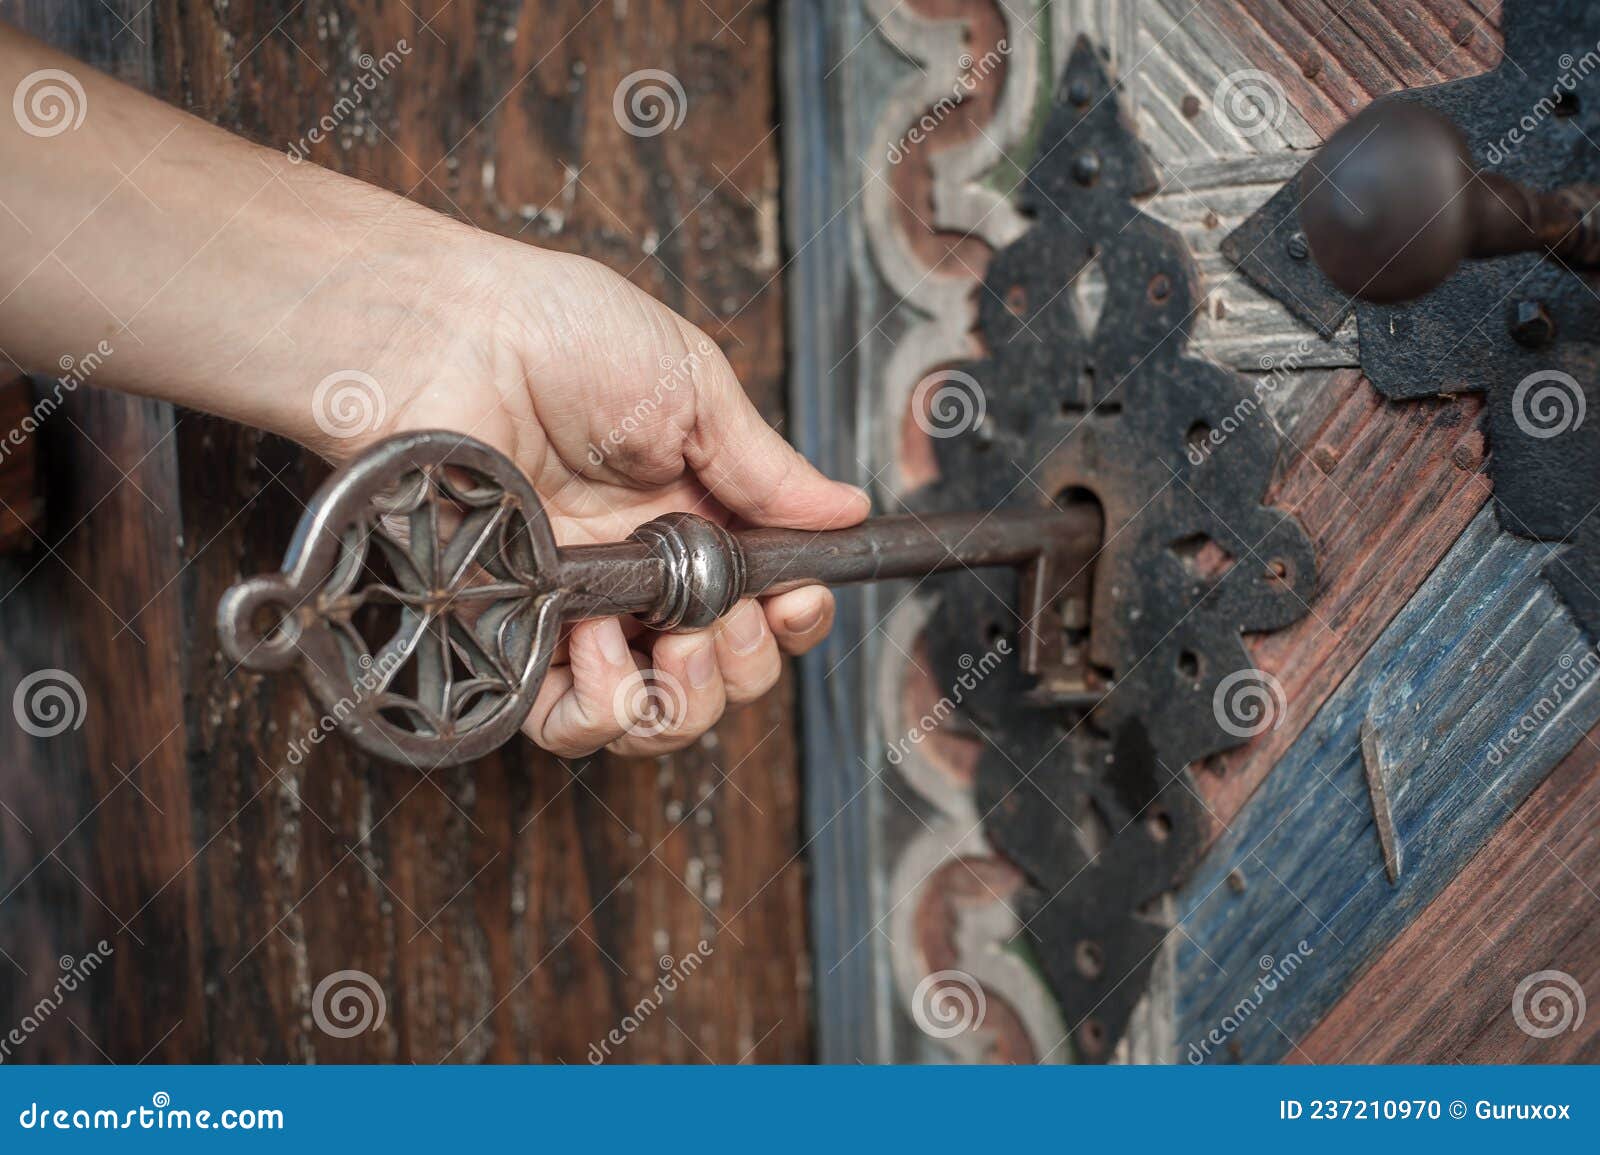 man-holds-huge-key-hand-unlocks-large-door-closeup-detail-view-man-holds-huge-massive-medieval-church-key-his-hand-237210970.jpg